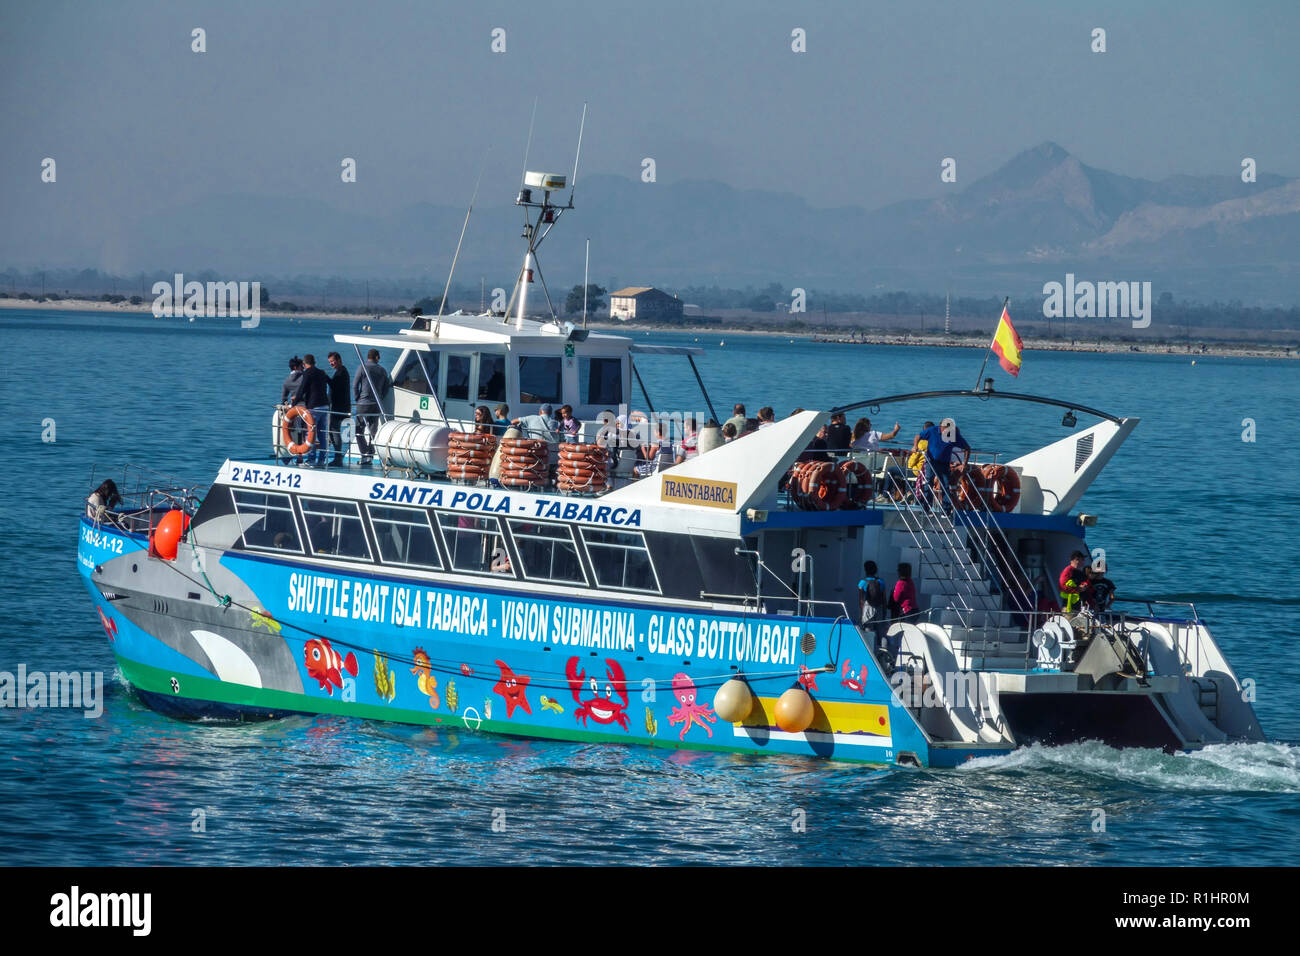 Spain vacation Santa Pola, People on Shuttle boat Santa Pola - Tabarca ferry, Costa Blanca People in Spain Stock Photo